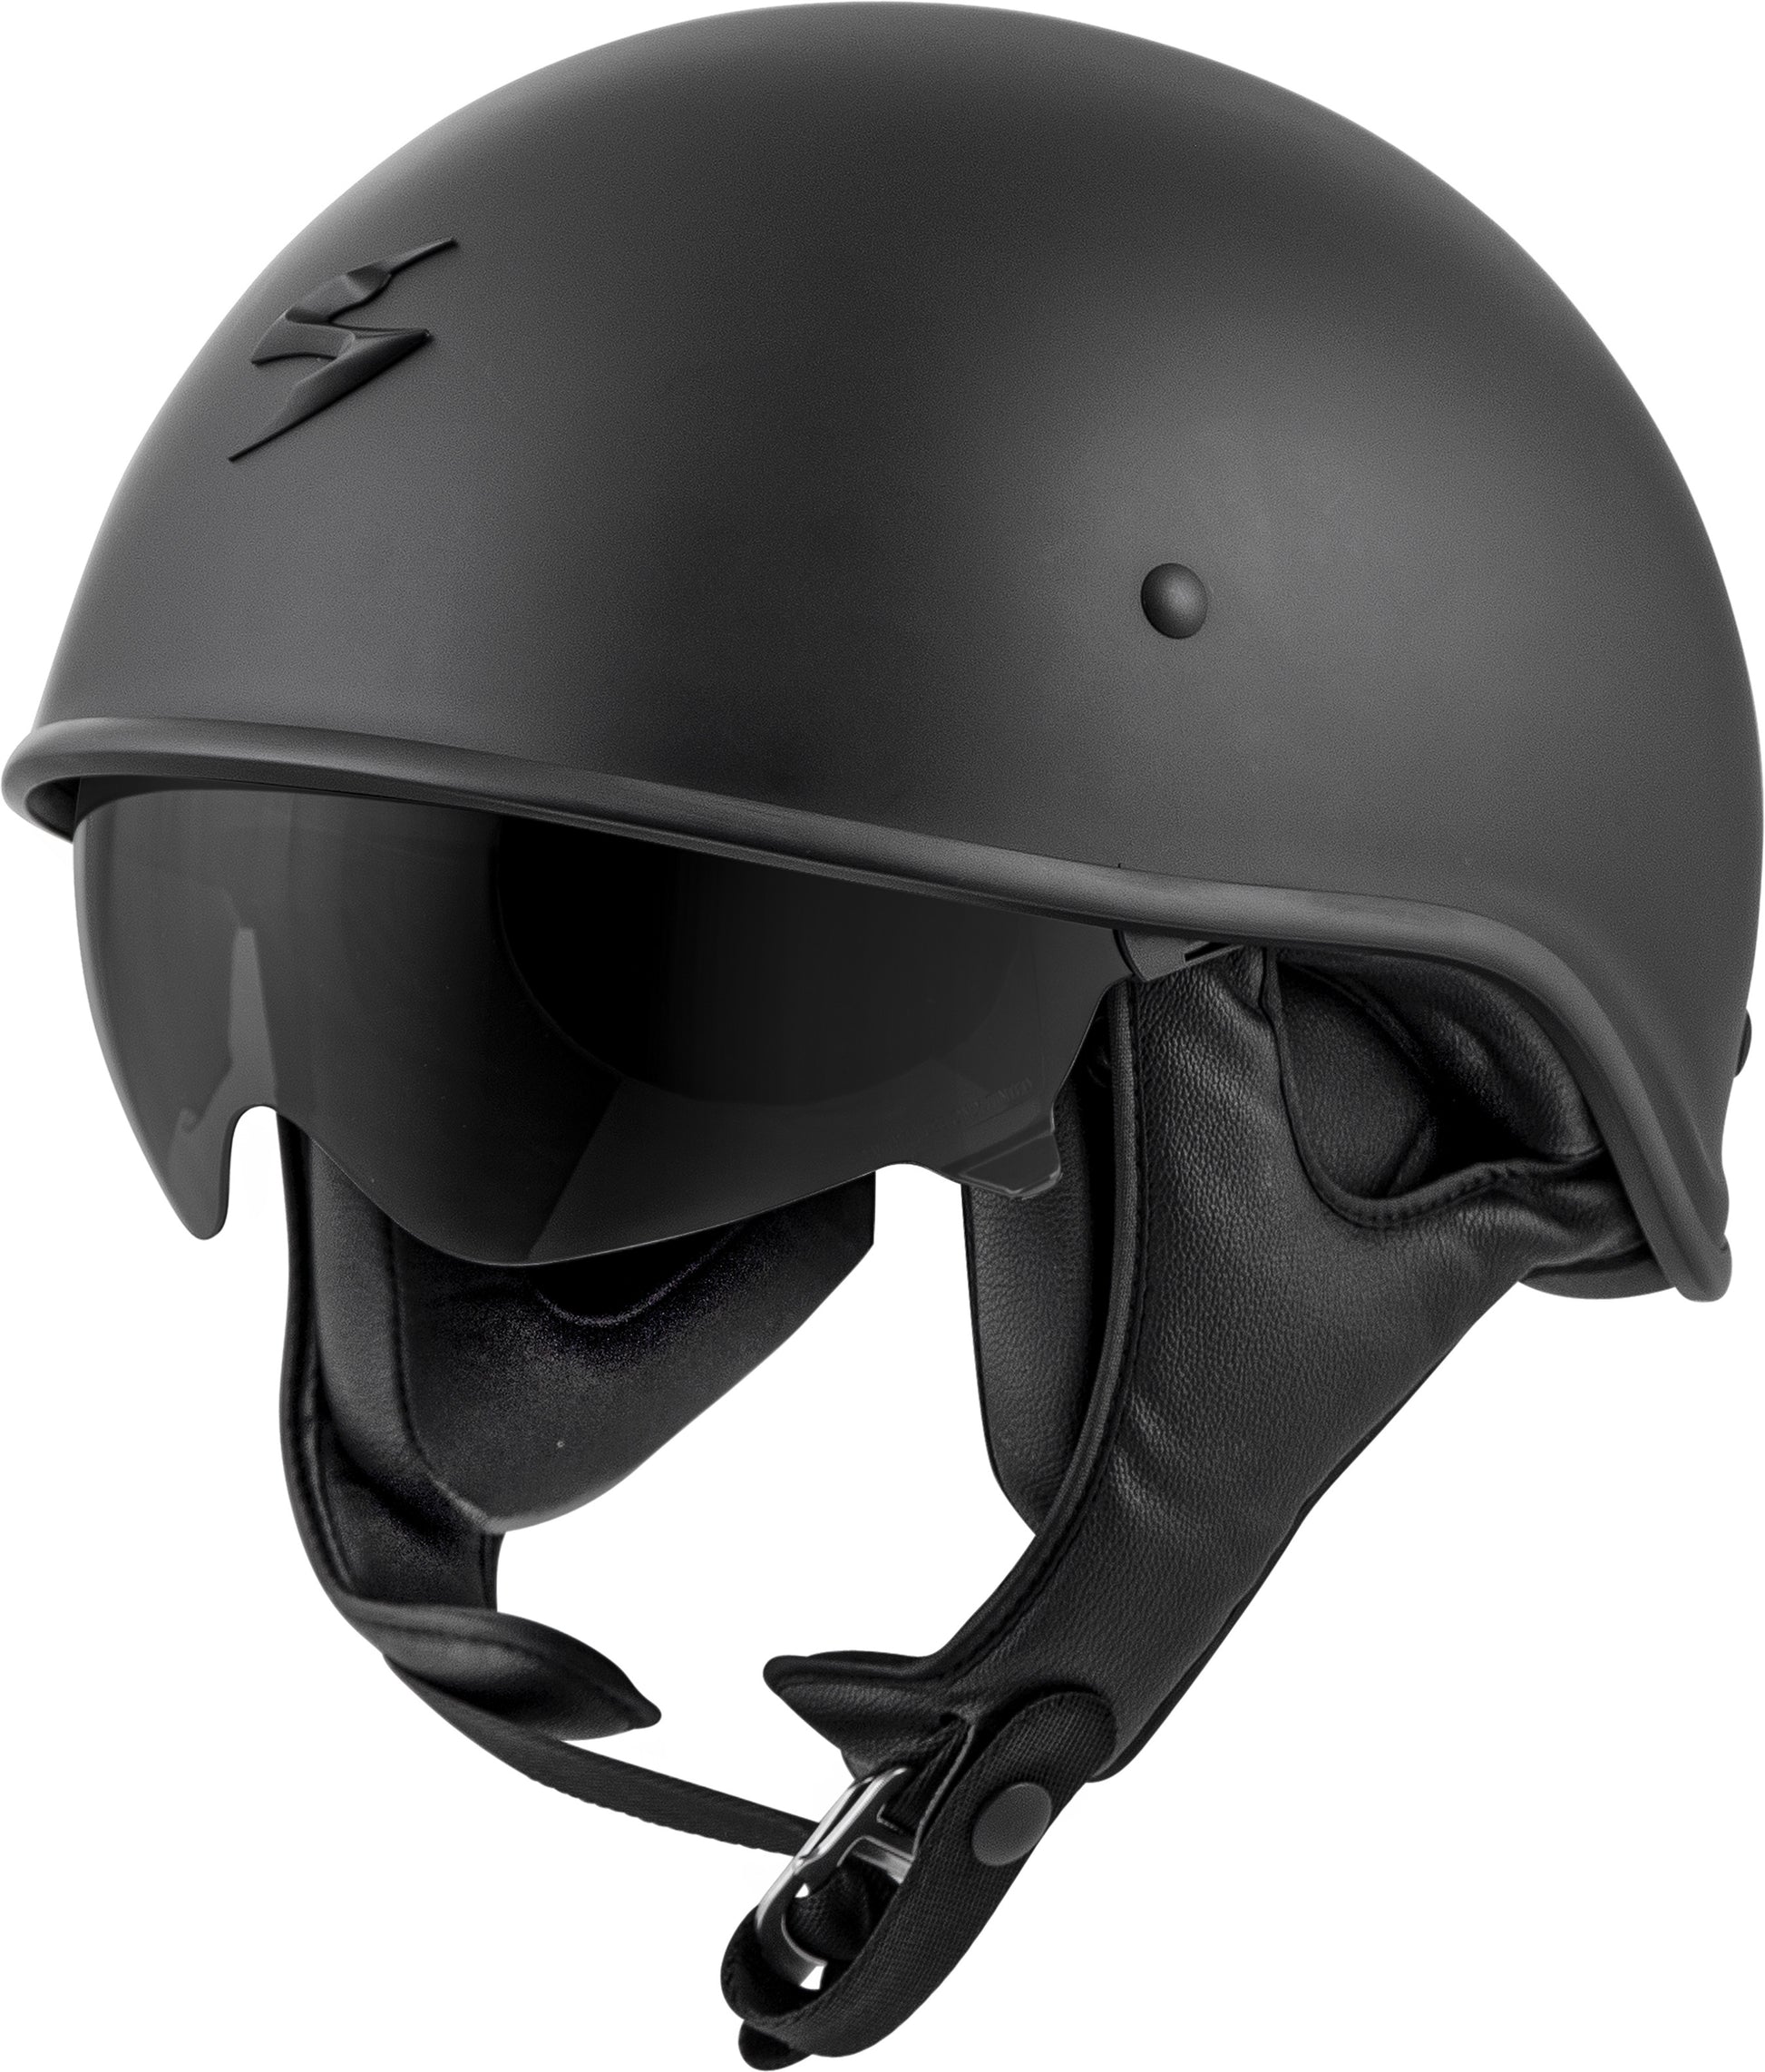 Scorpion Exo 75-1641 EXO-C90 Open-Face Helmet Matte Black